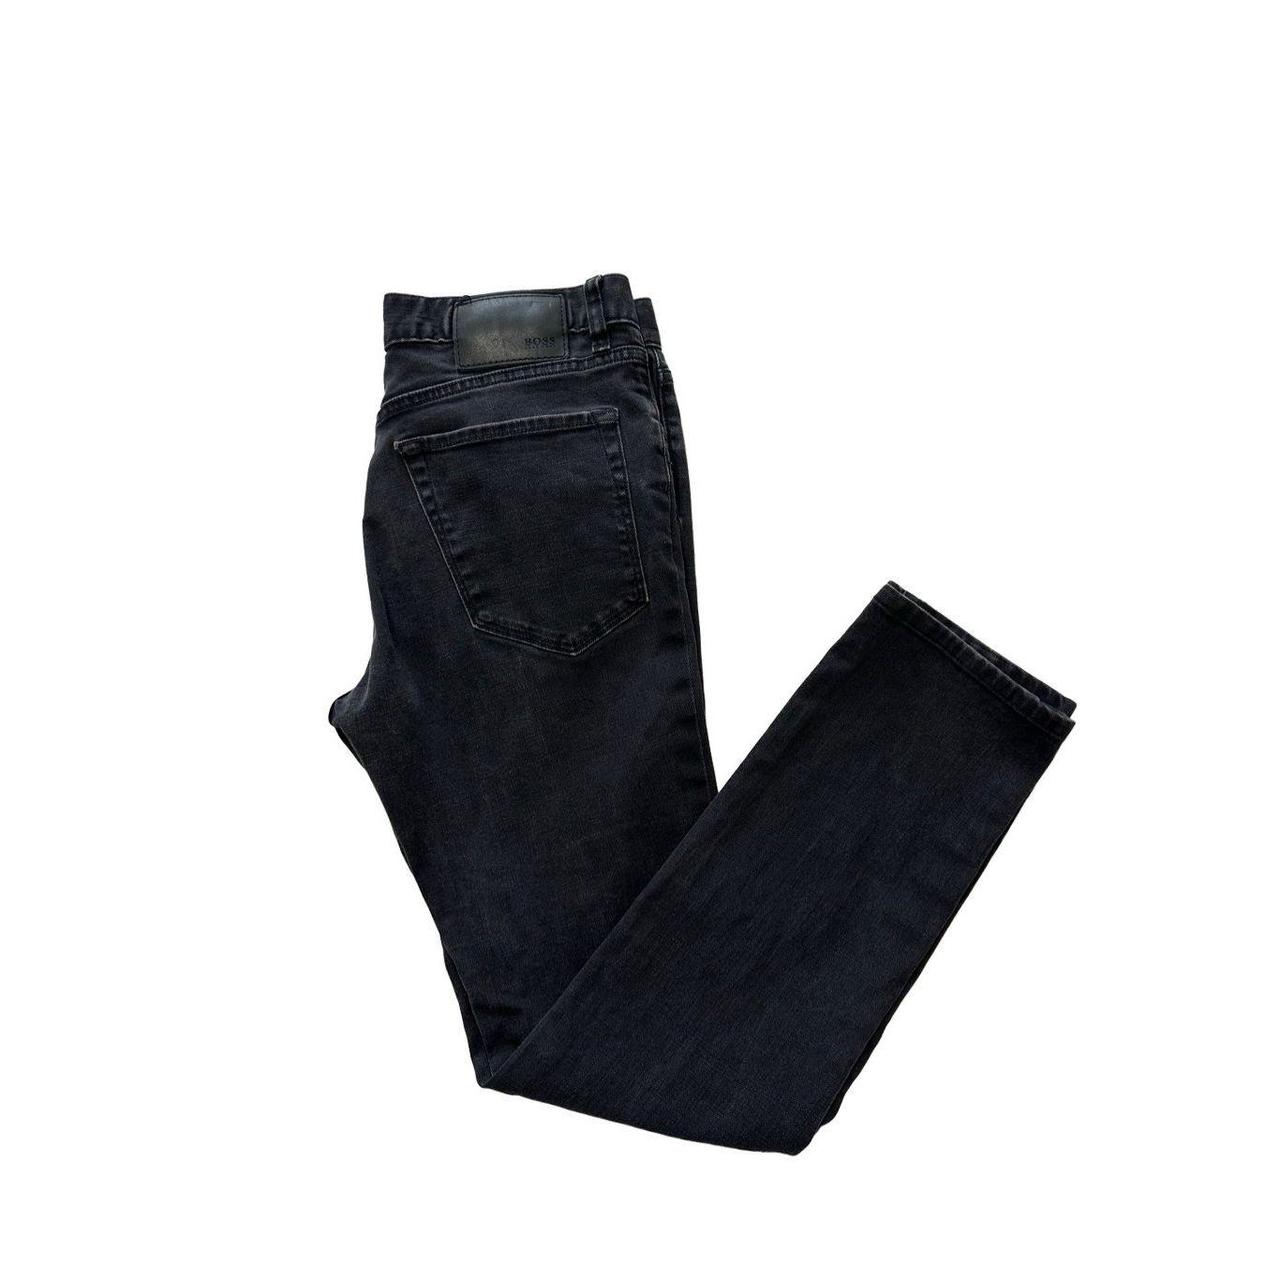 HUGO BOSS MAINE Jeans Stretch Black Jeans 33/32 C - Depop